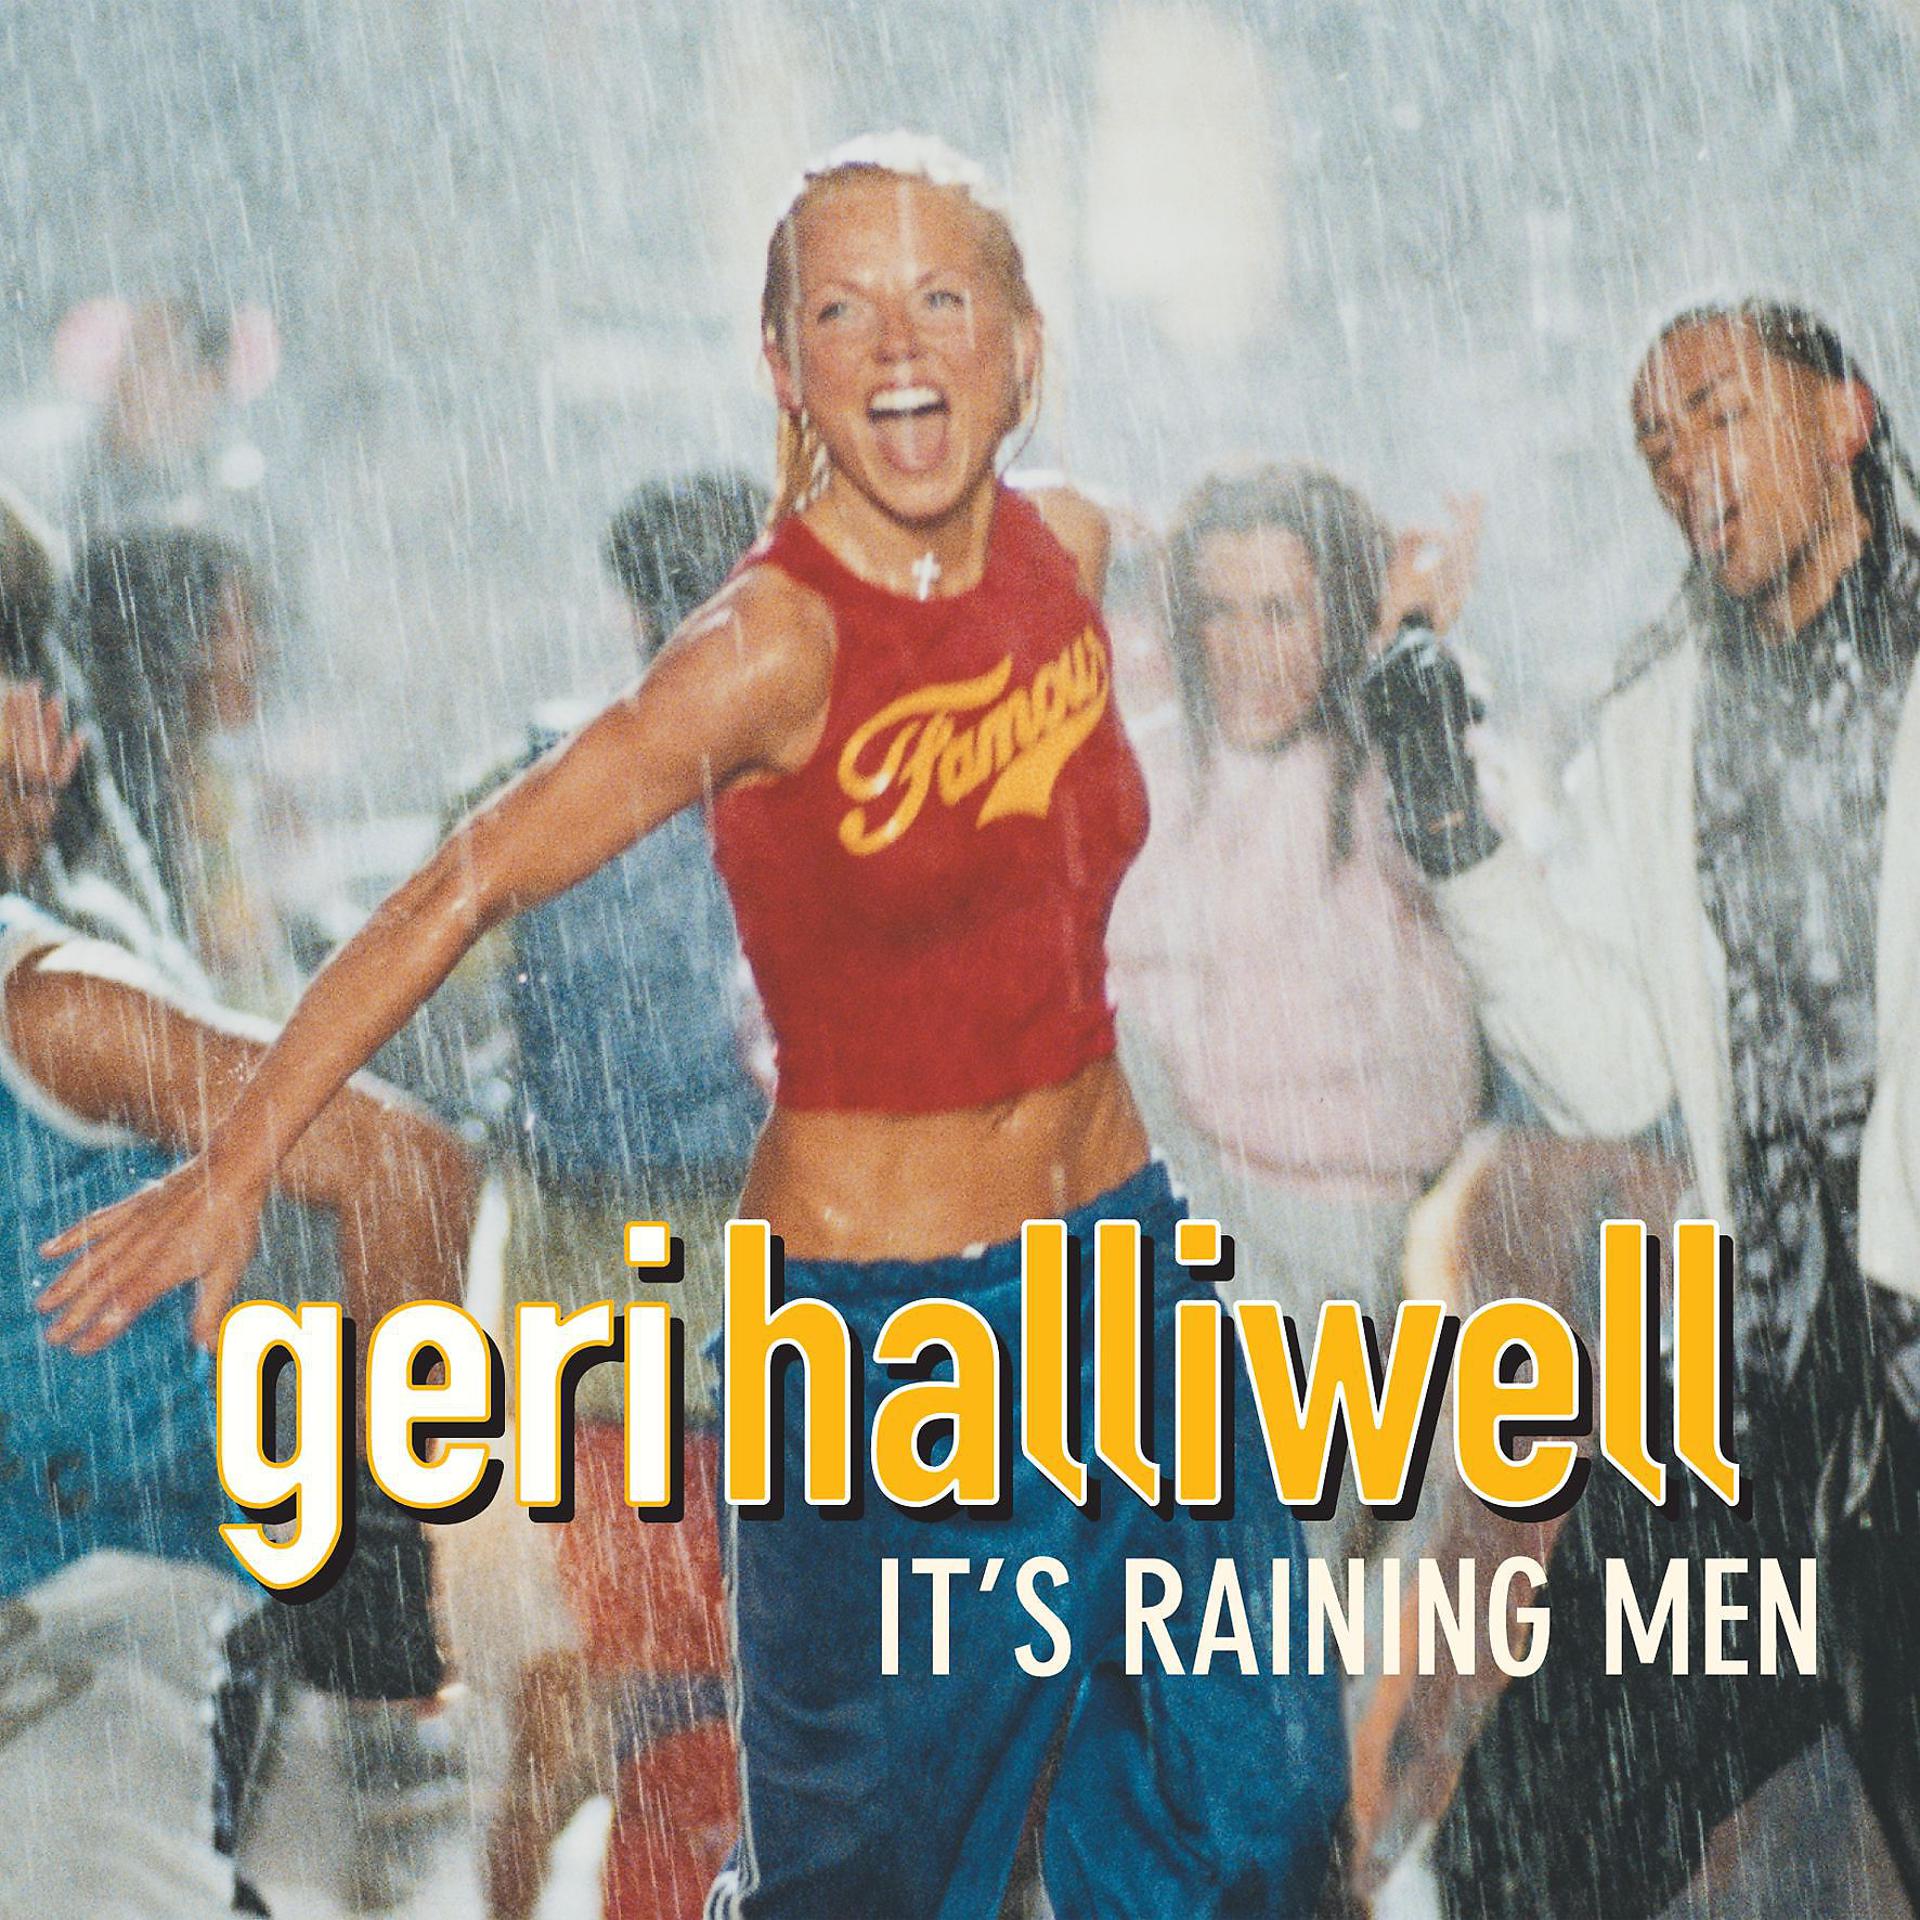 Halliwell raining man